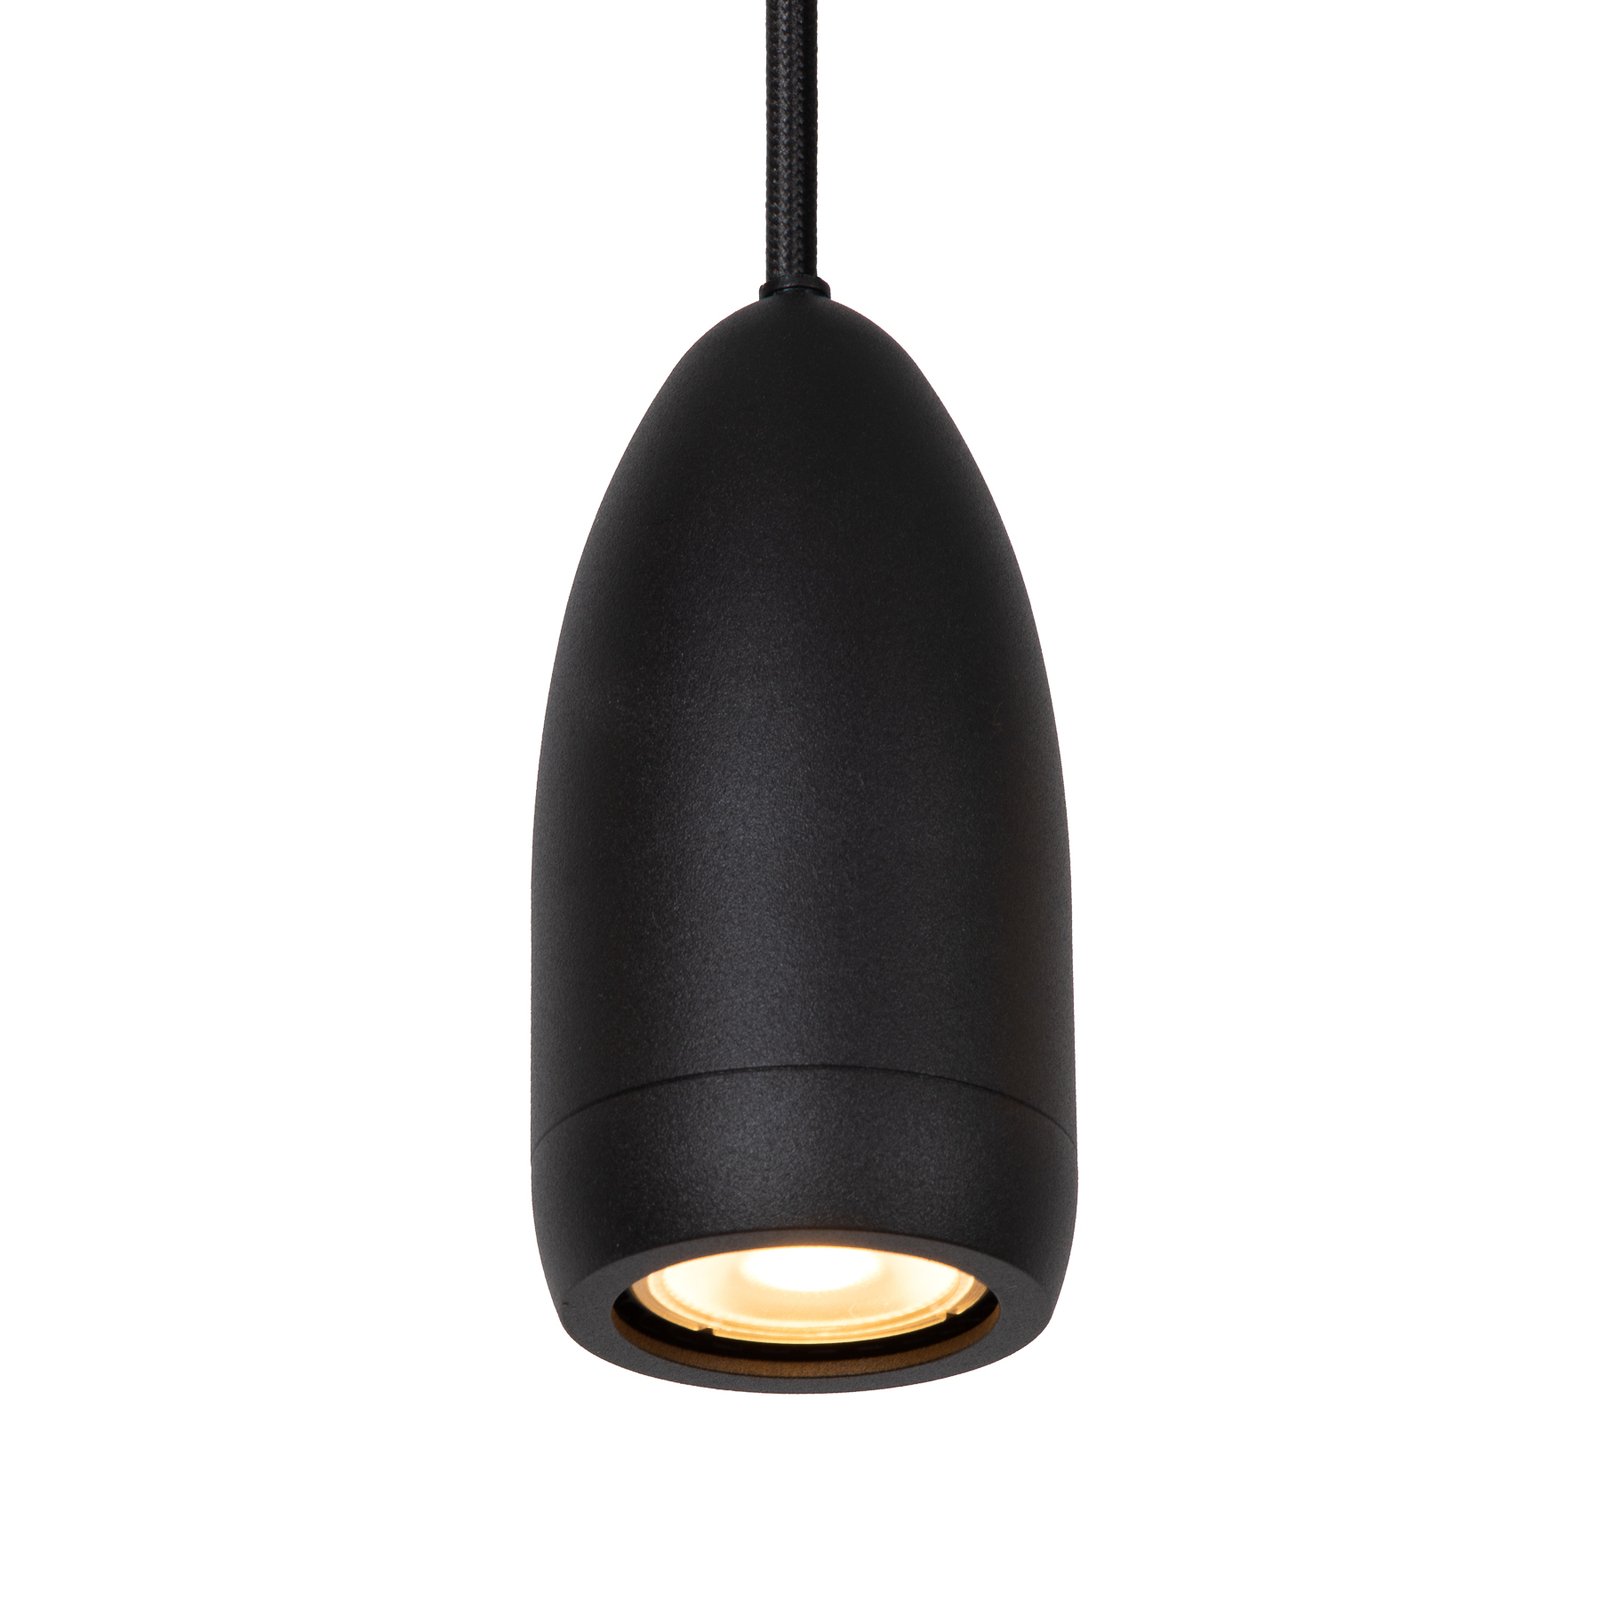 Evora pendant light, 3-bulb, circular, black